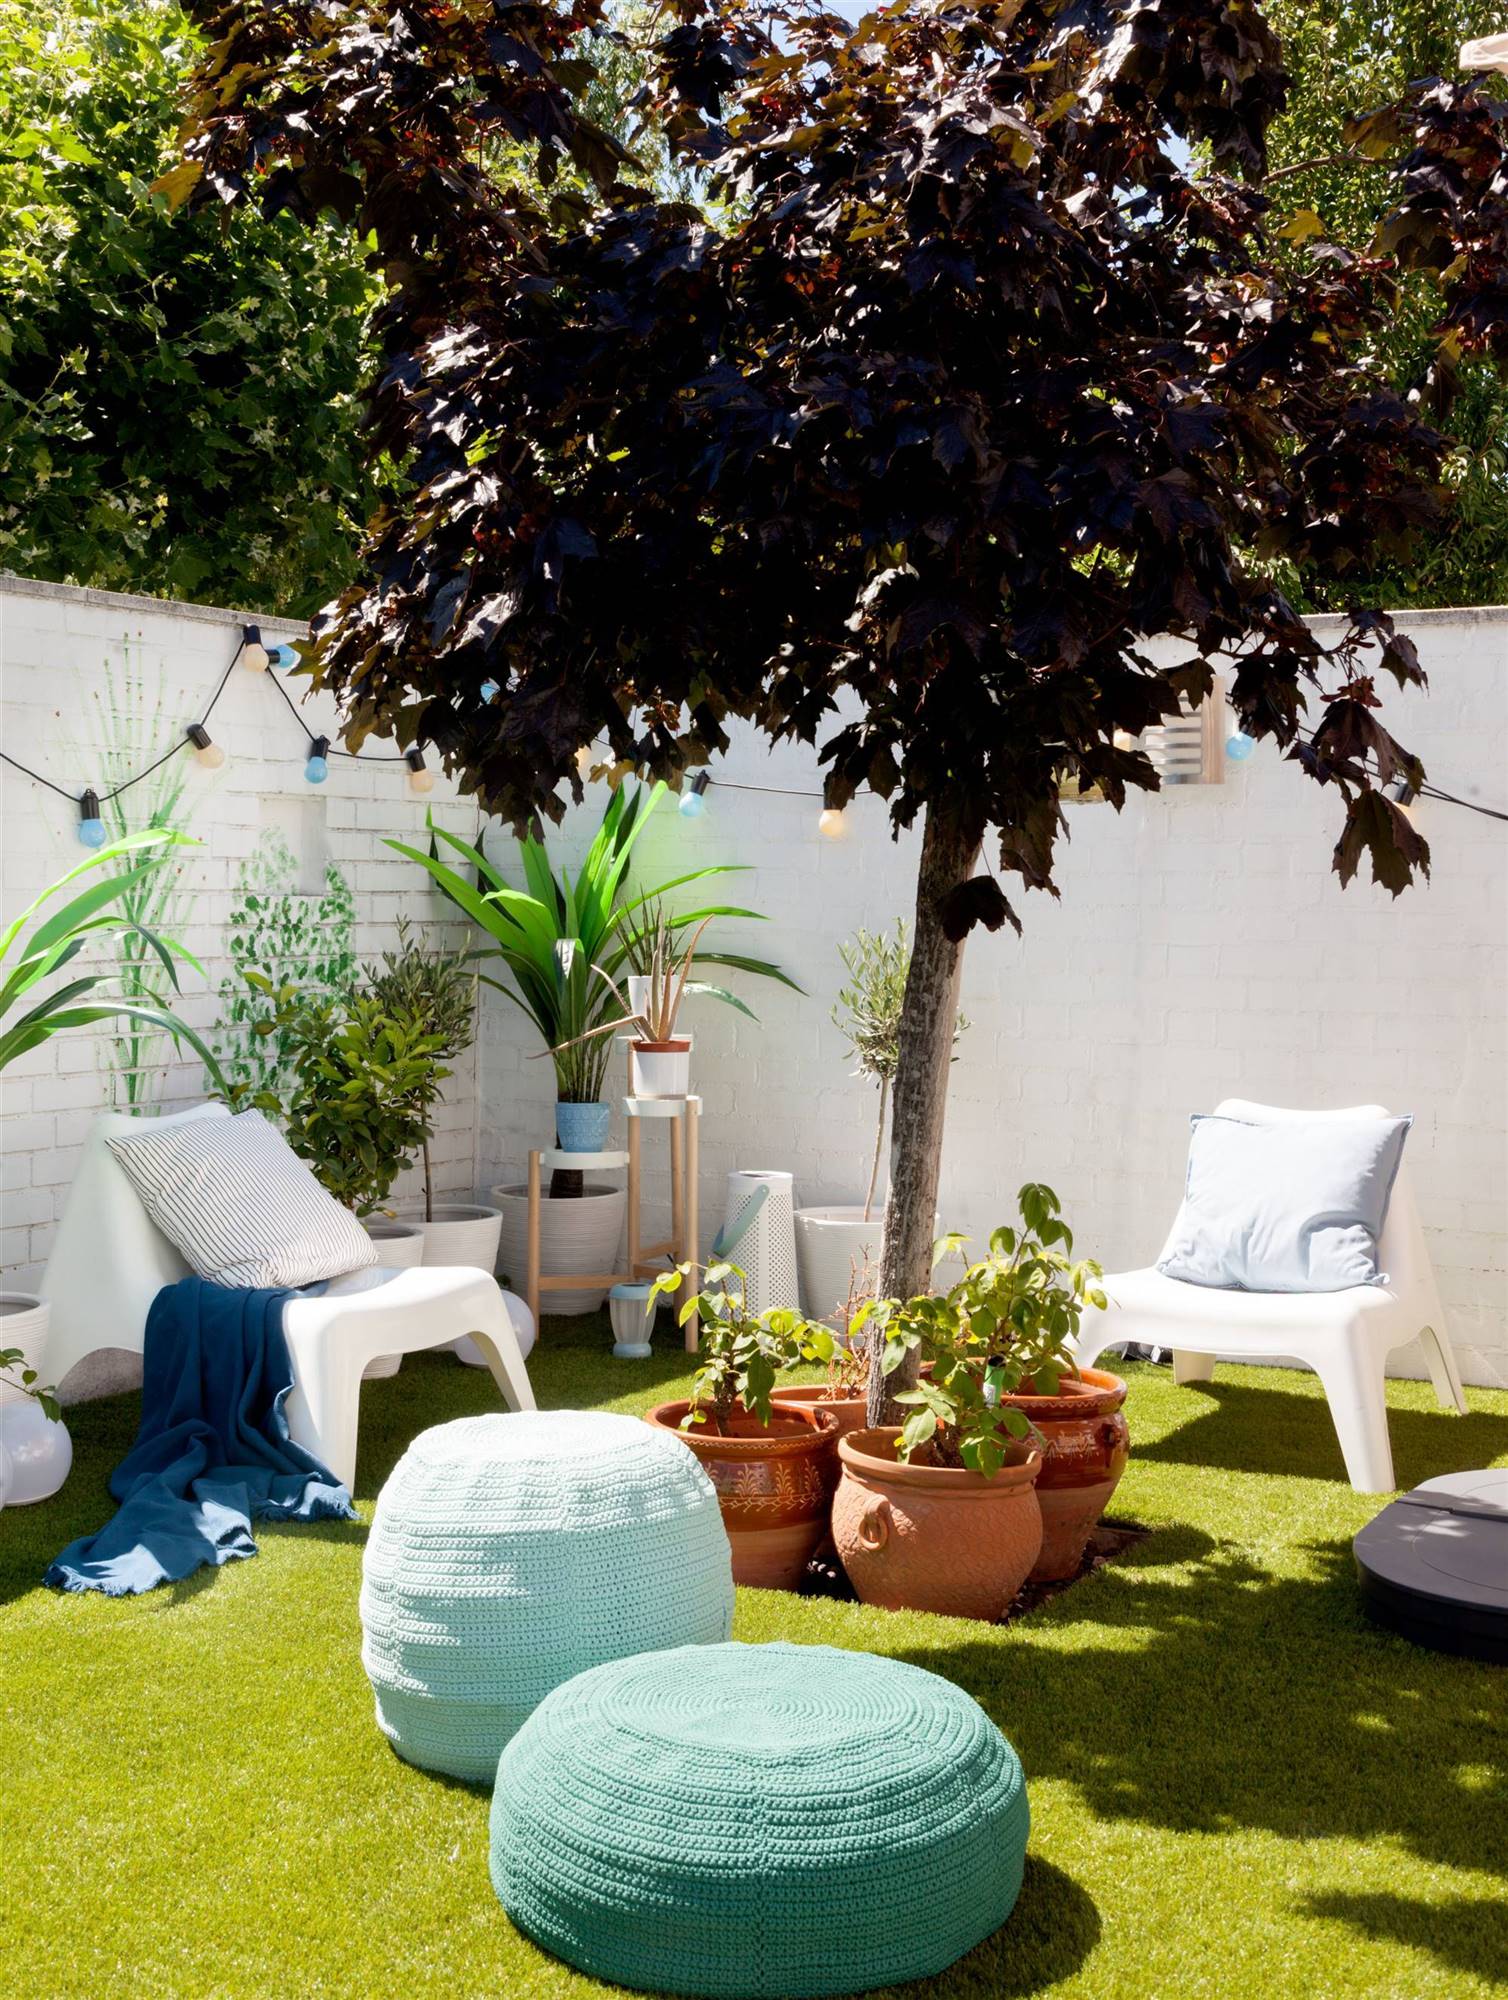 Terraza con chill out con butacas blancas, puffs azules y macetas con plantas.